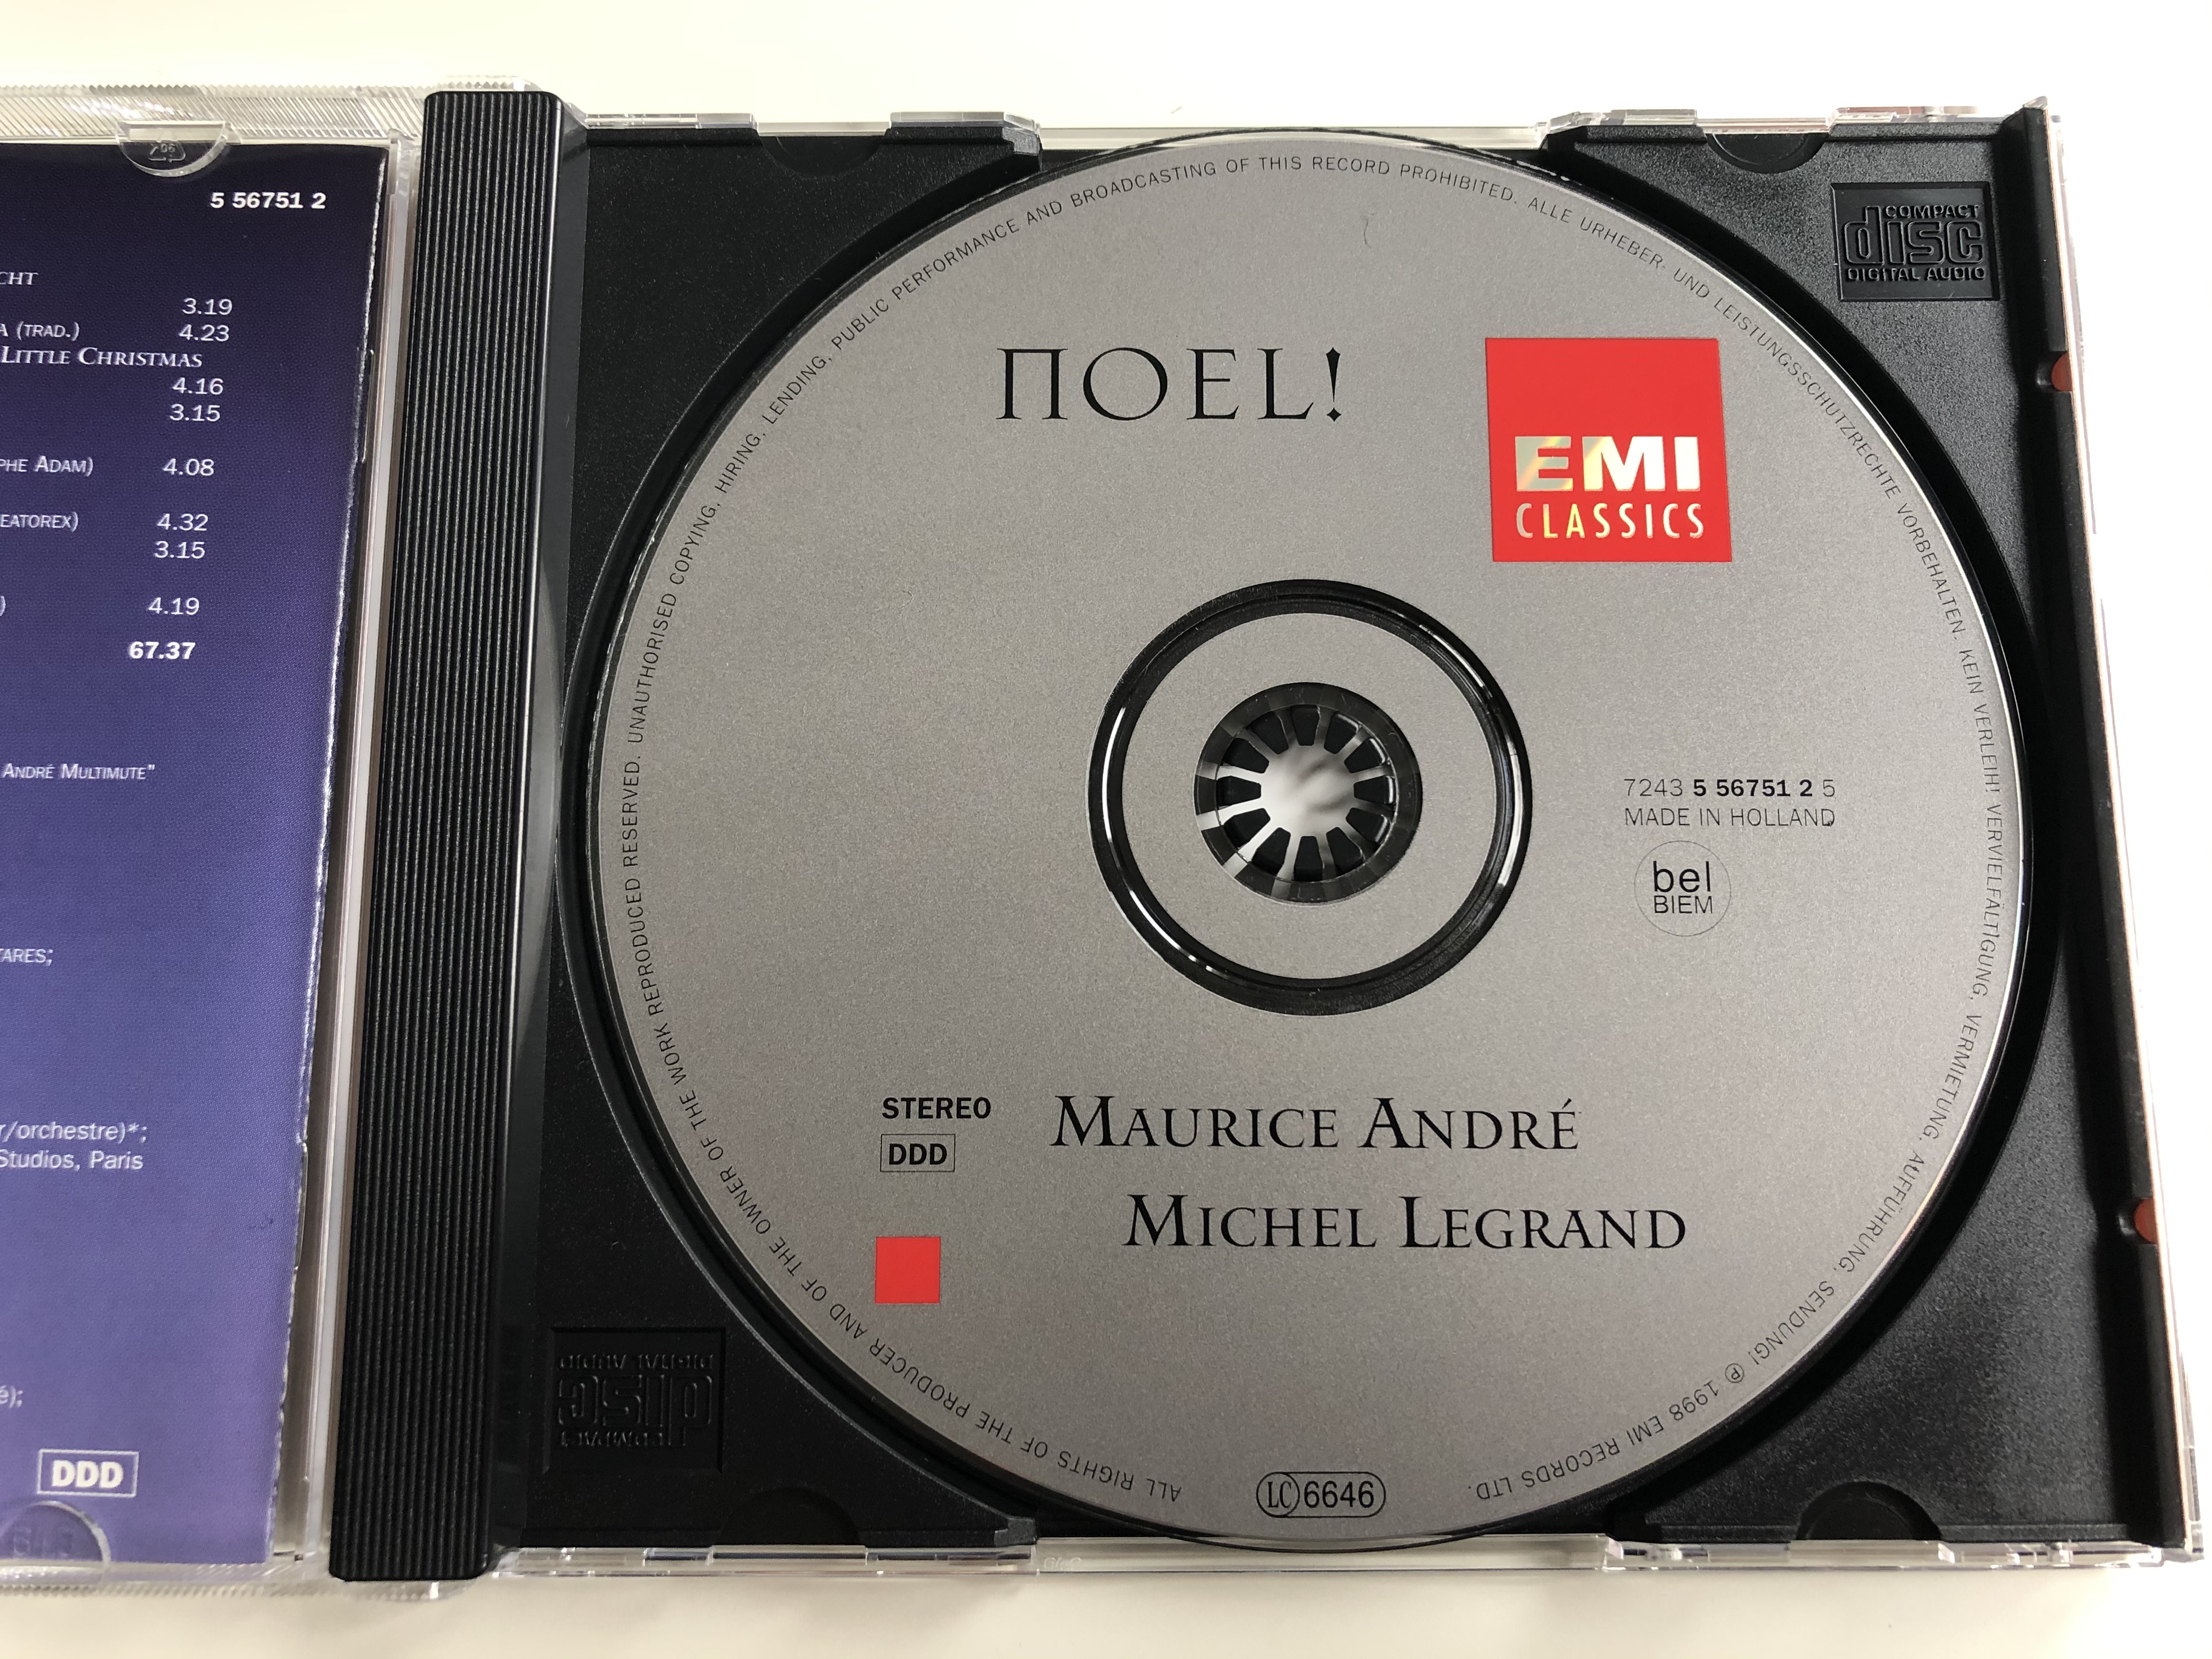 noel-maurice-andr-michel-legrand-beatrice-andre-nicolas-andre-catherine-michel-london-philharmonic-orchestra-emi-classics-audio-cd-1998-stereo-5-56751-2-6-.jpg